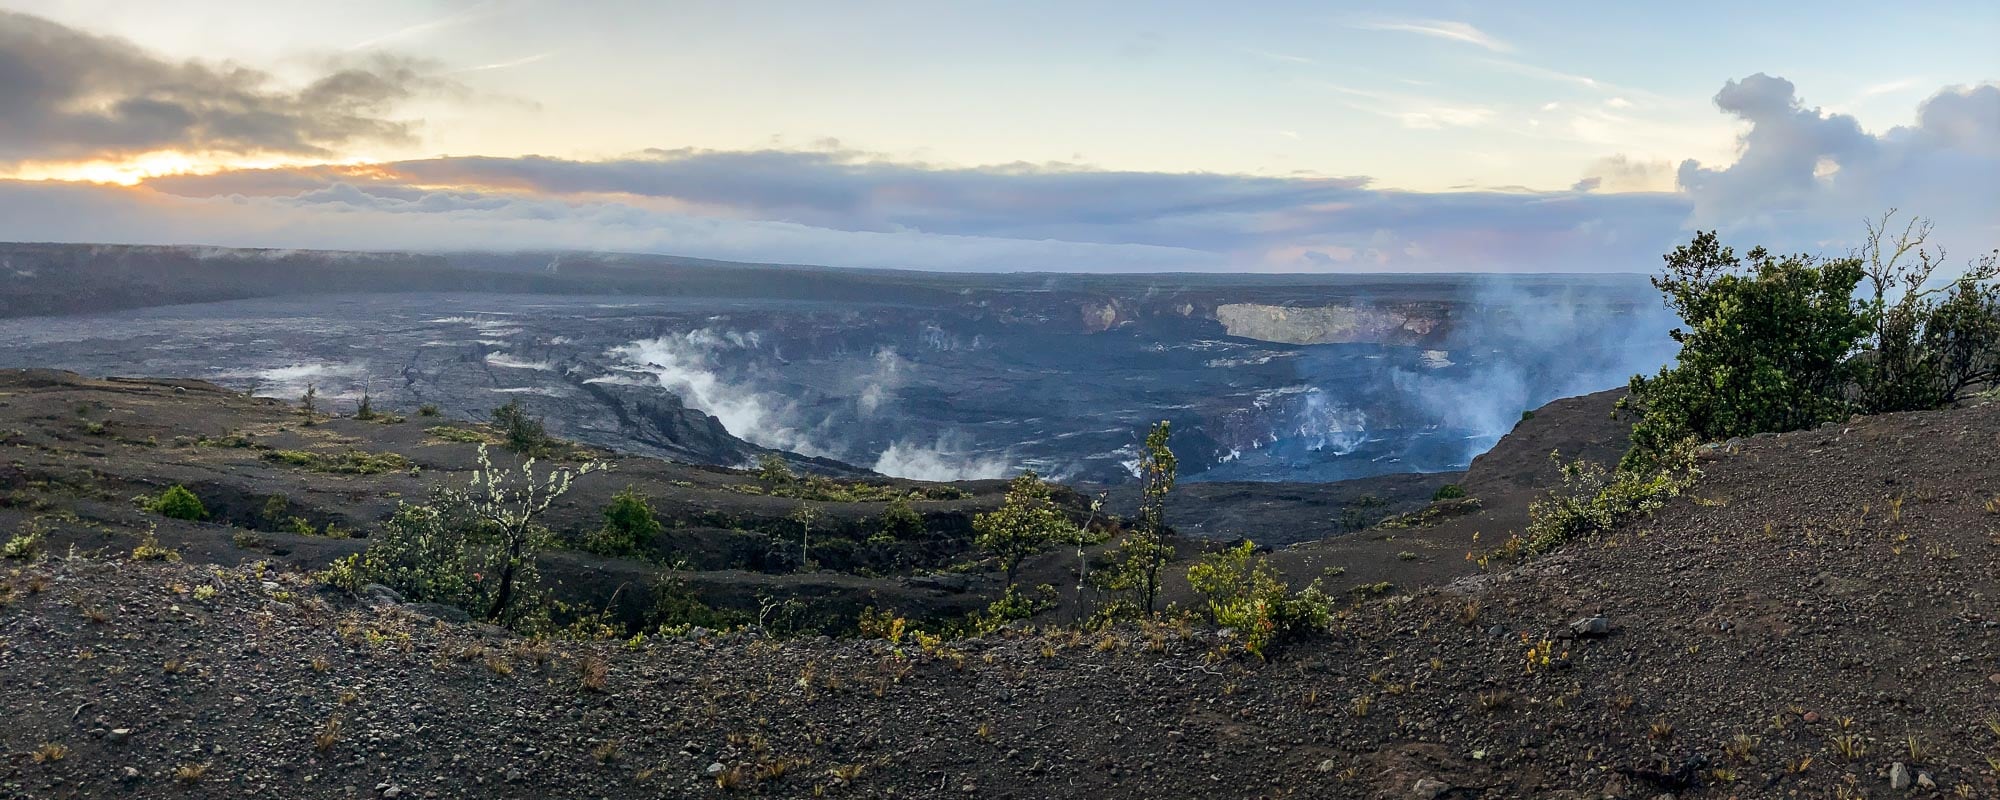 Uēkahuna Overlook panorama, Crater Rim Drive in Hawai'i Volcanoes National Park, Hawaii